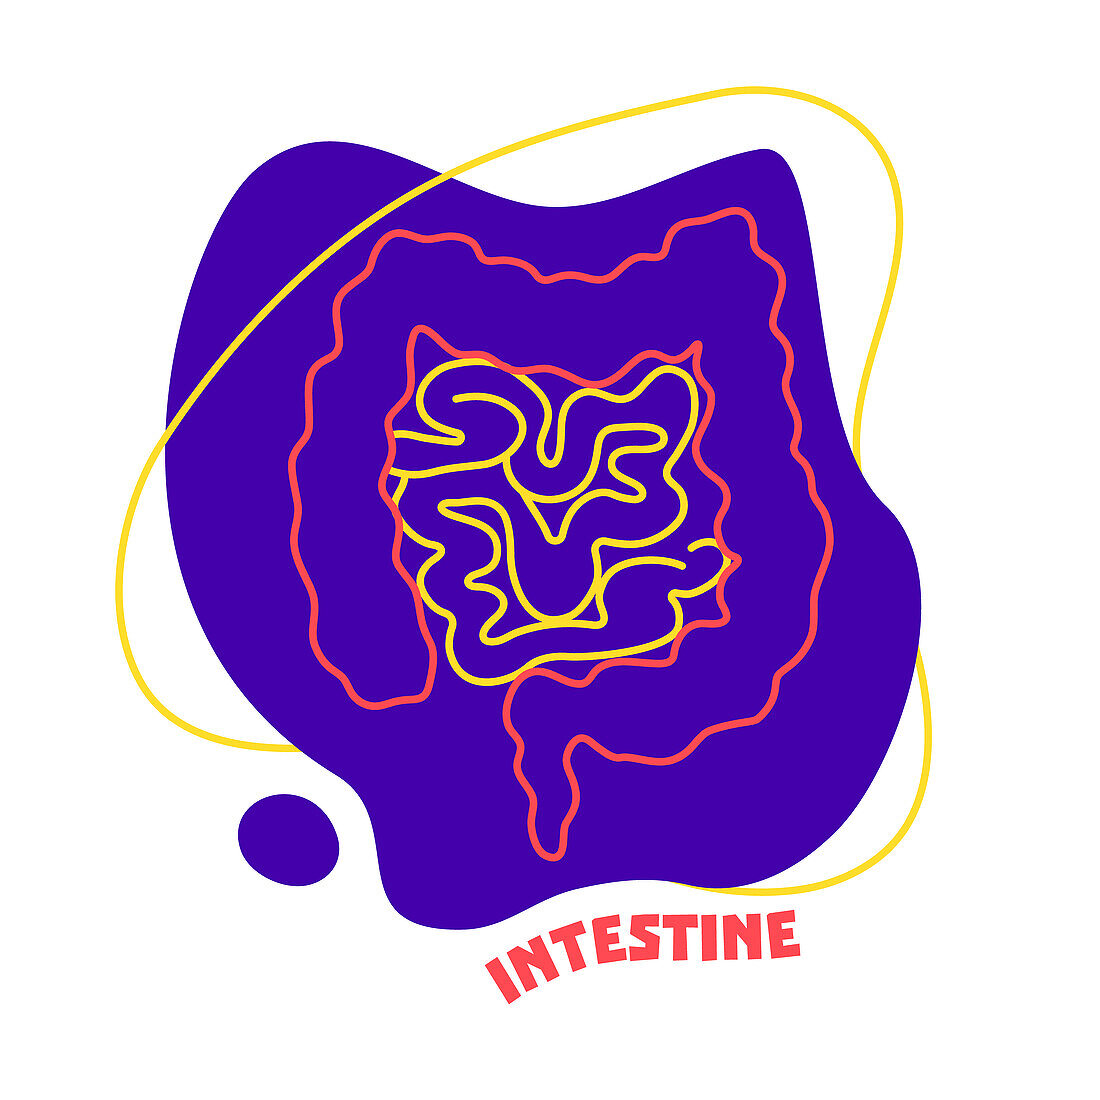 Human intestine, conceptual illustration